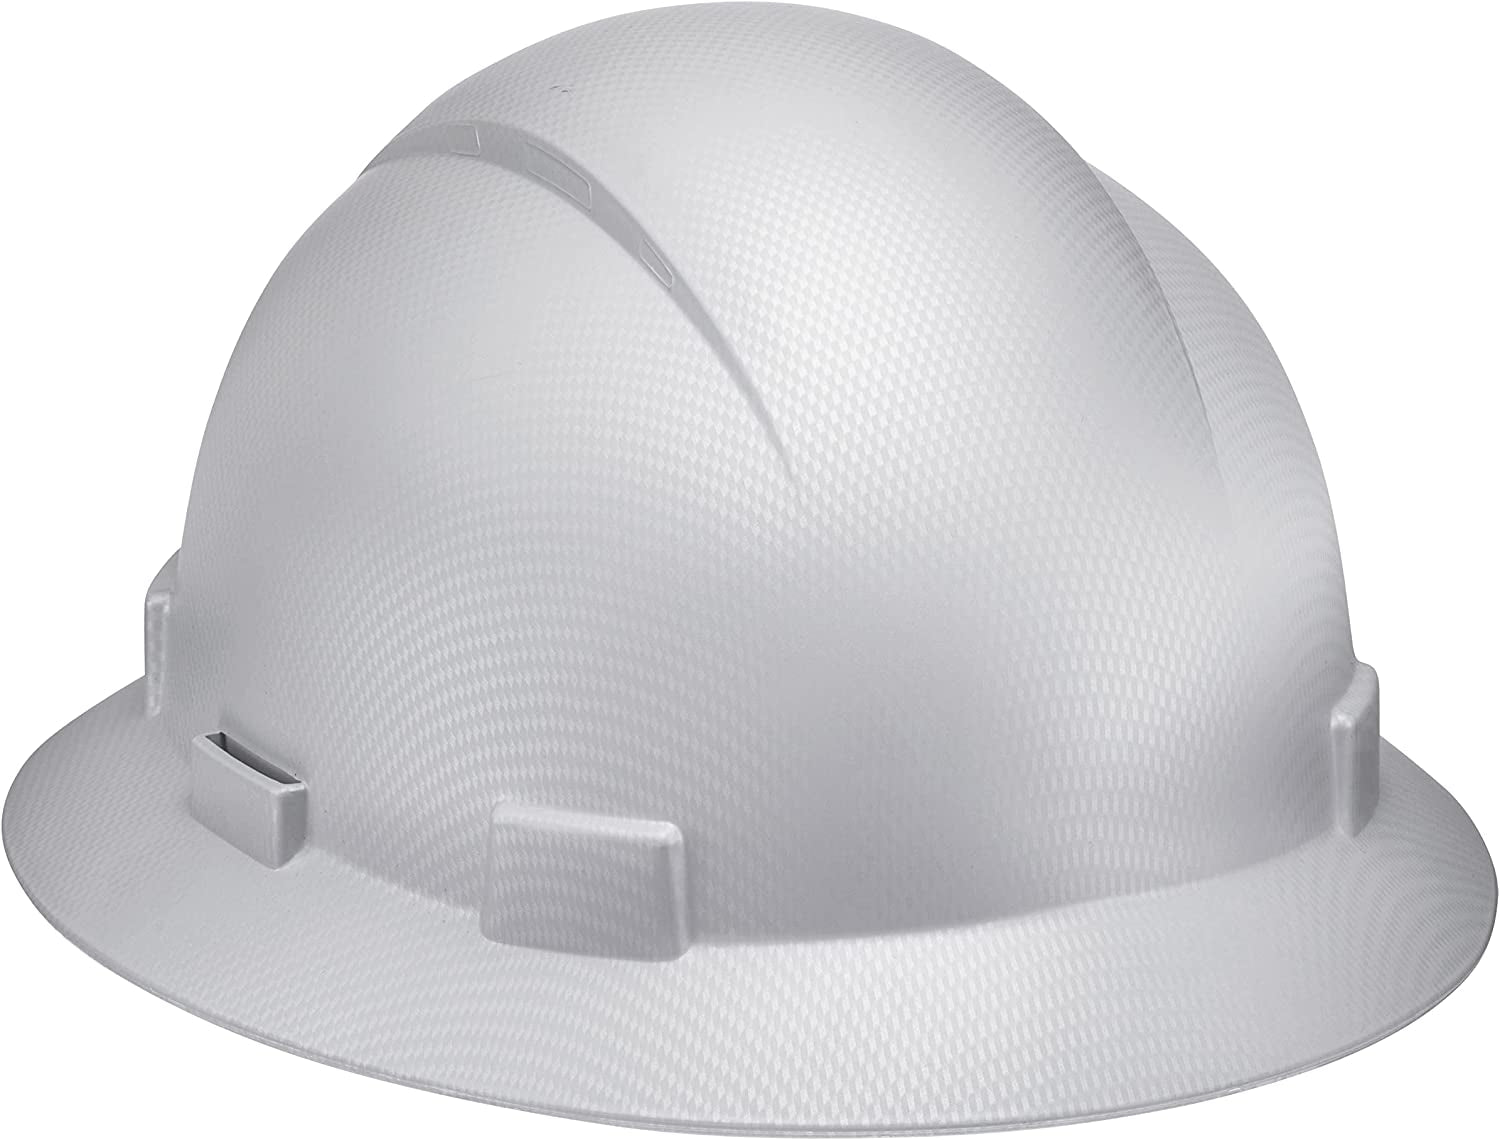 ACERPAL, Full Brim Pyramex Hard Hat, White Matte Carbon Fiber Design Safety Helmet 6Pt + 3Pk Blue Hard Hat Sweatband, by Acerpal